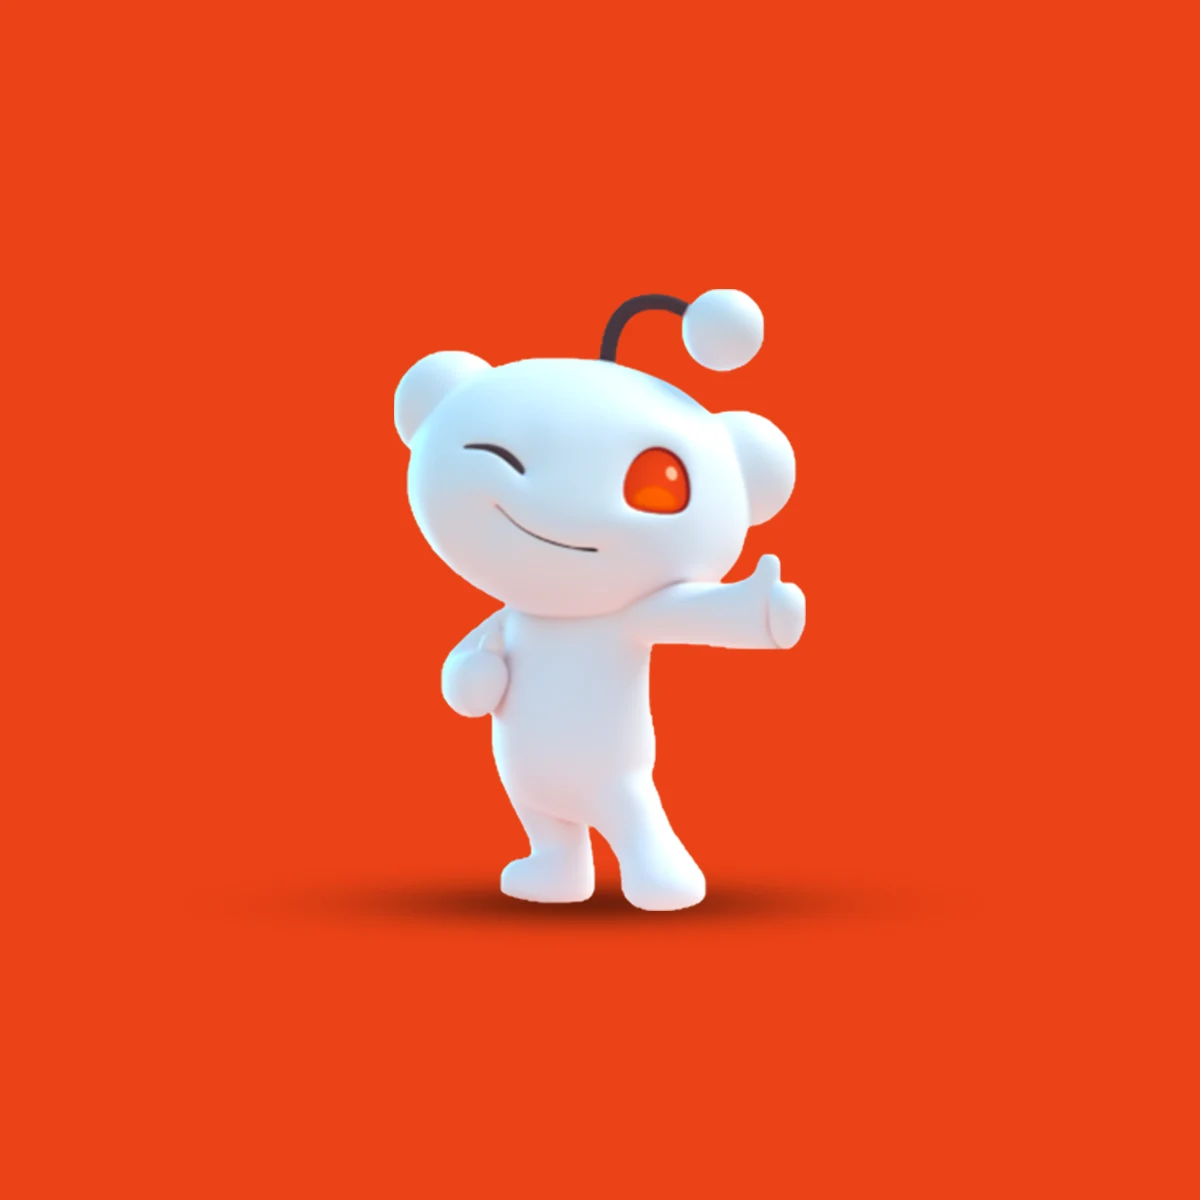 reddit-logo-3d-mascot